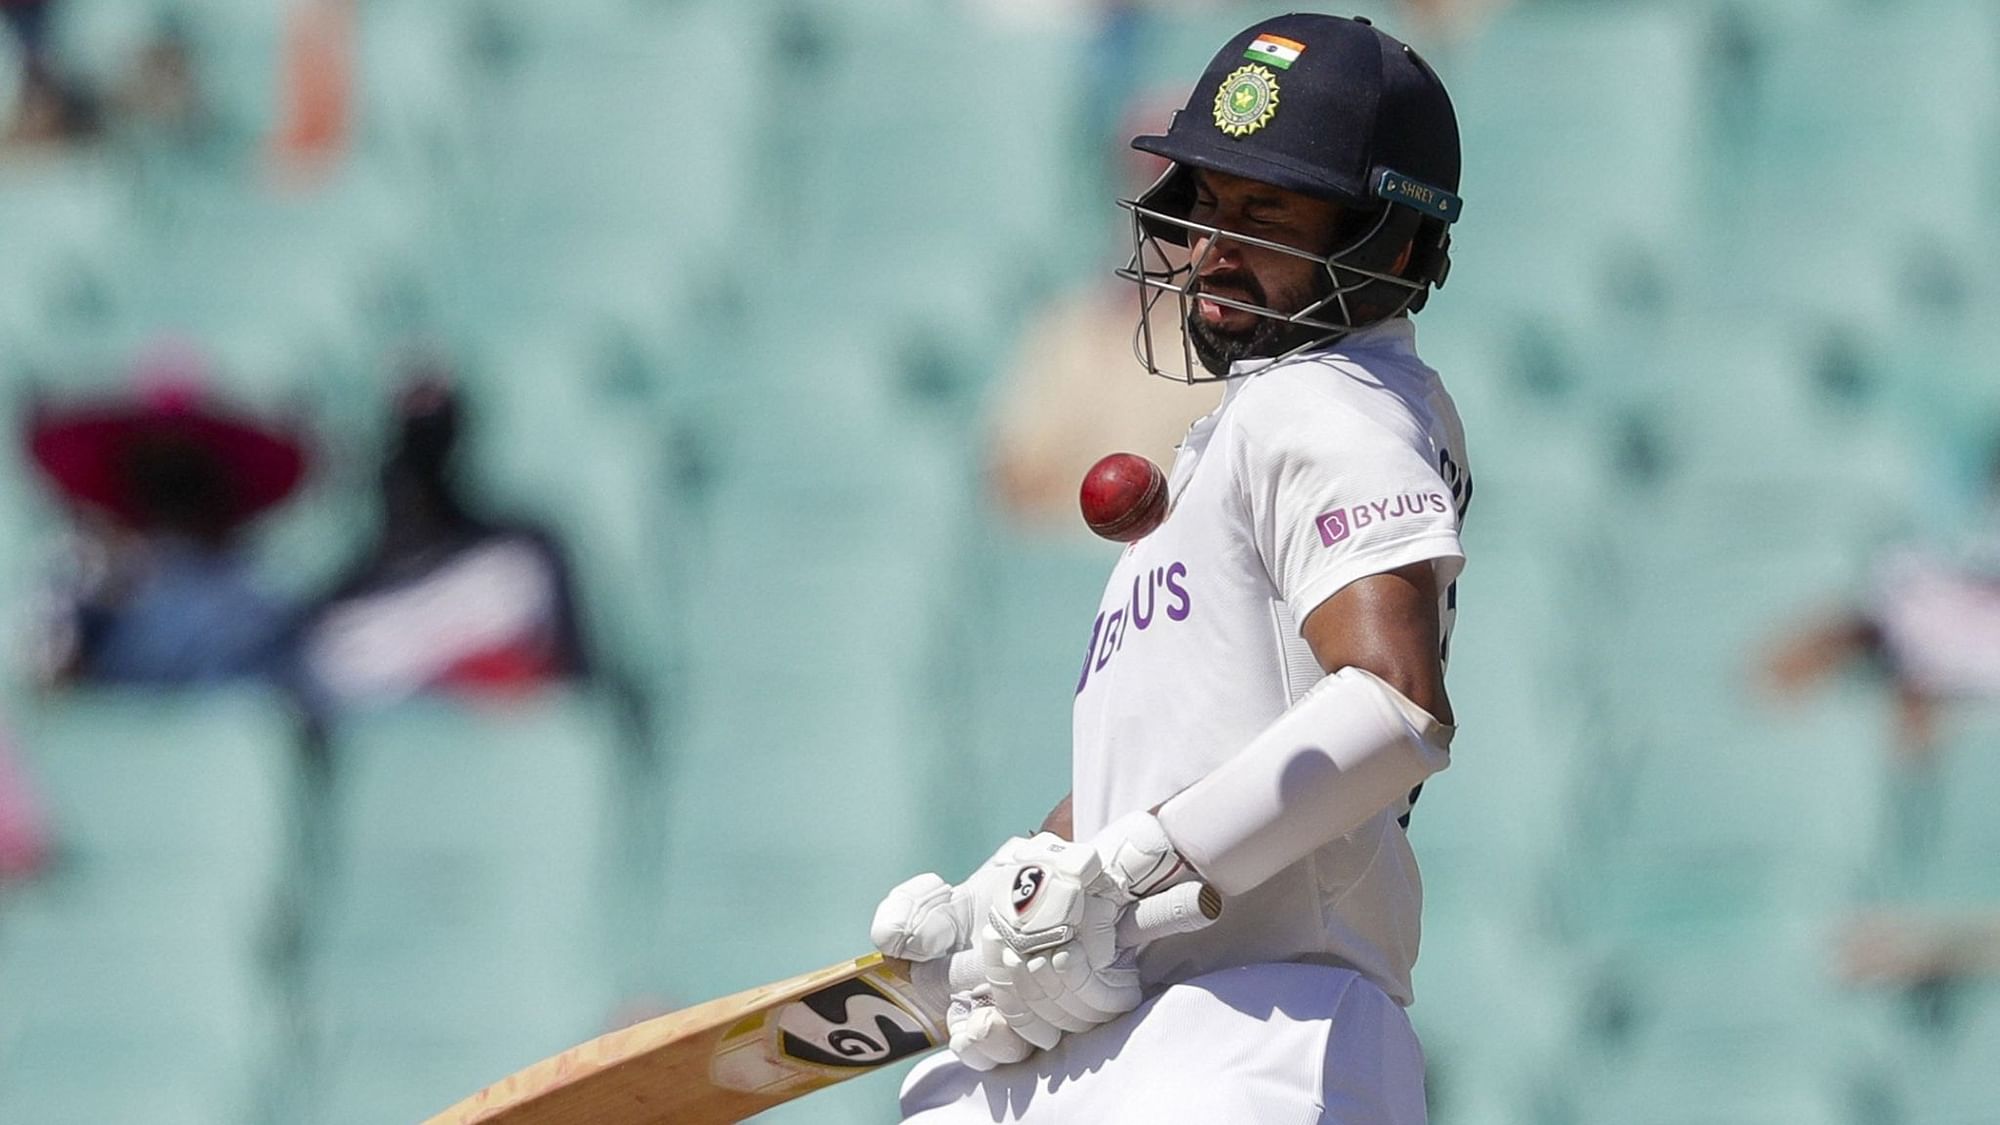 Cheteshwar Pujara waits his turn to bat at MCG against Australia during 2018/19 tour.&nbsp;